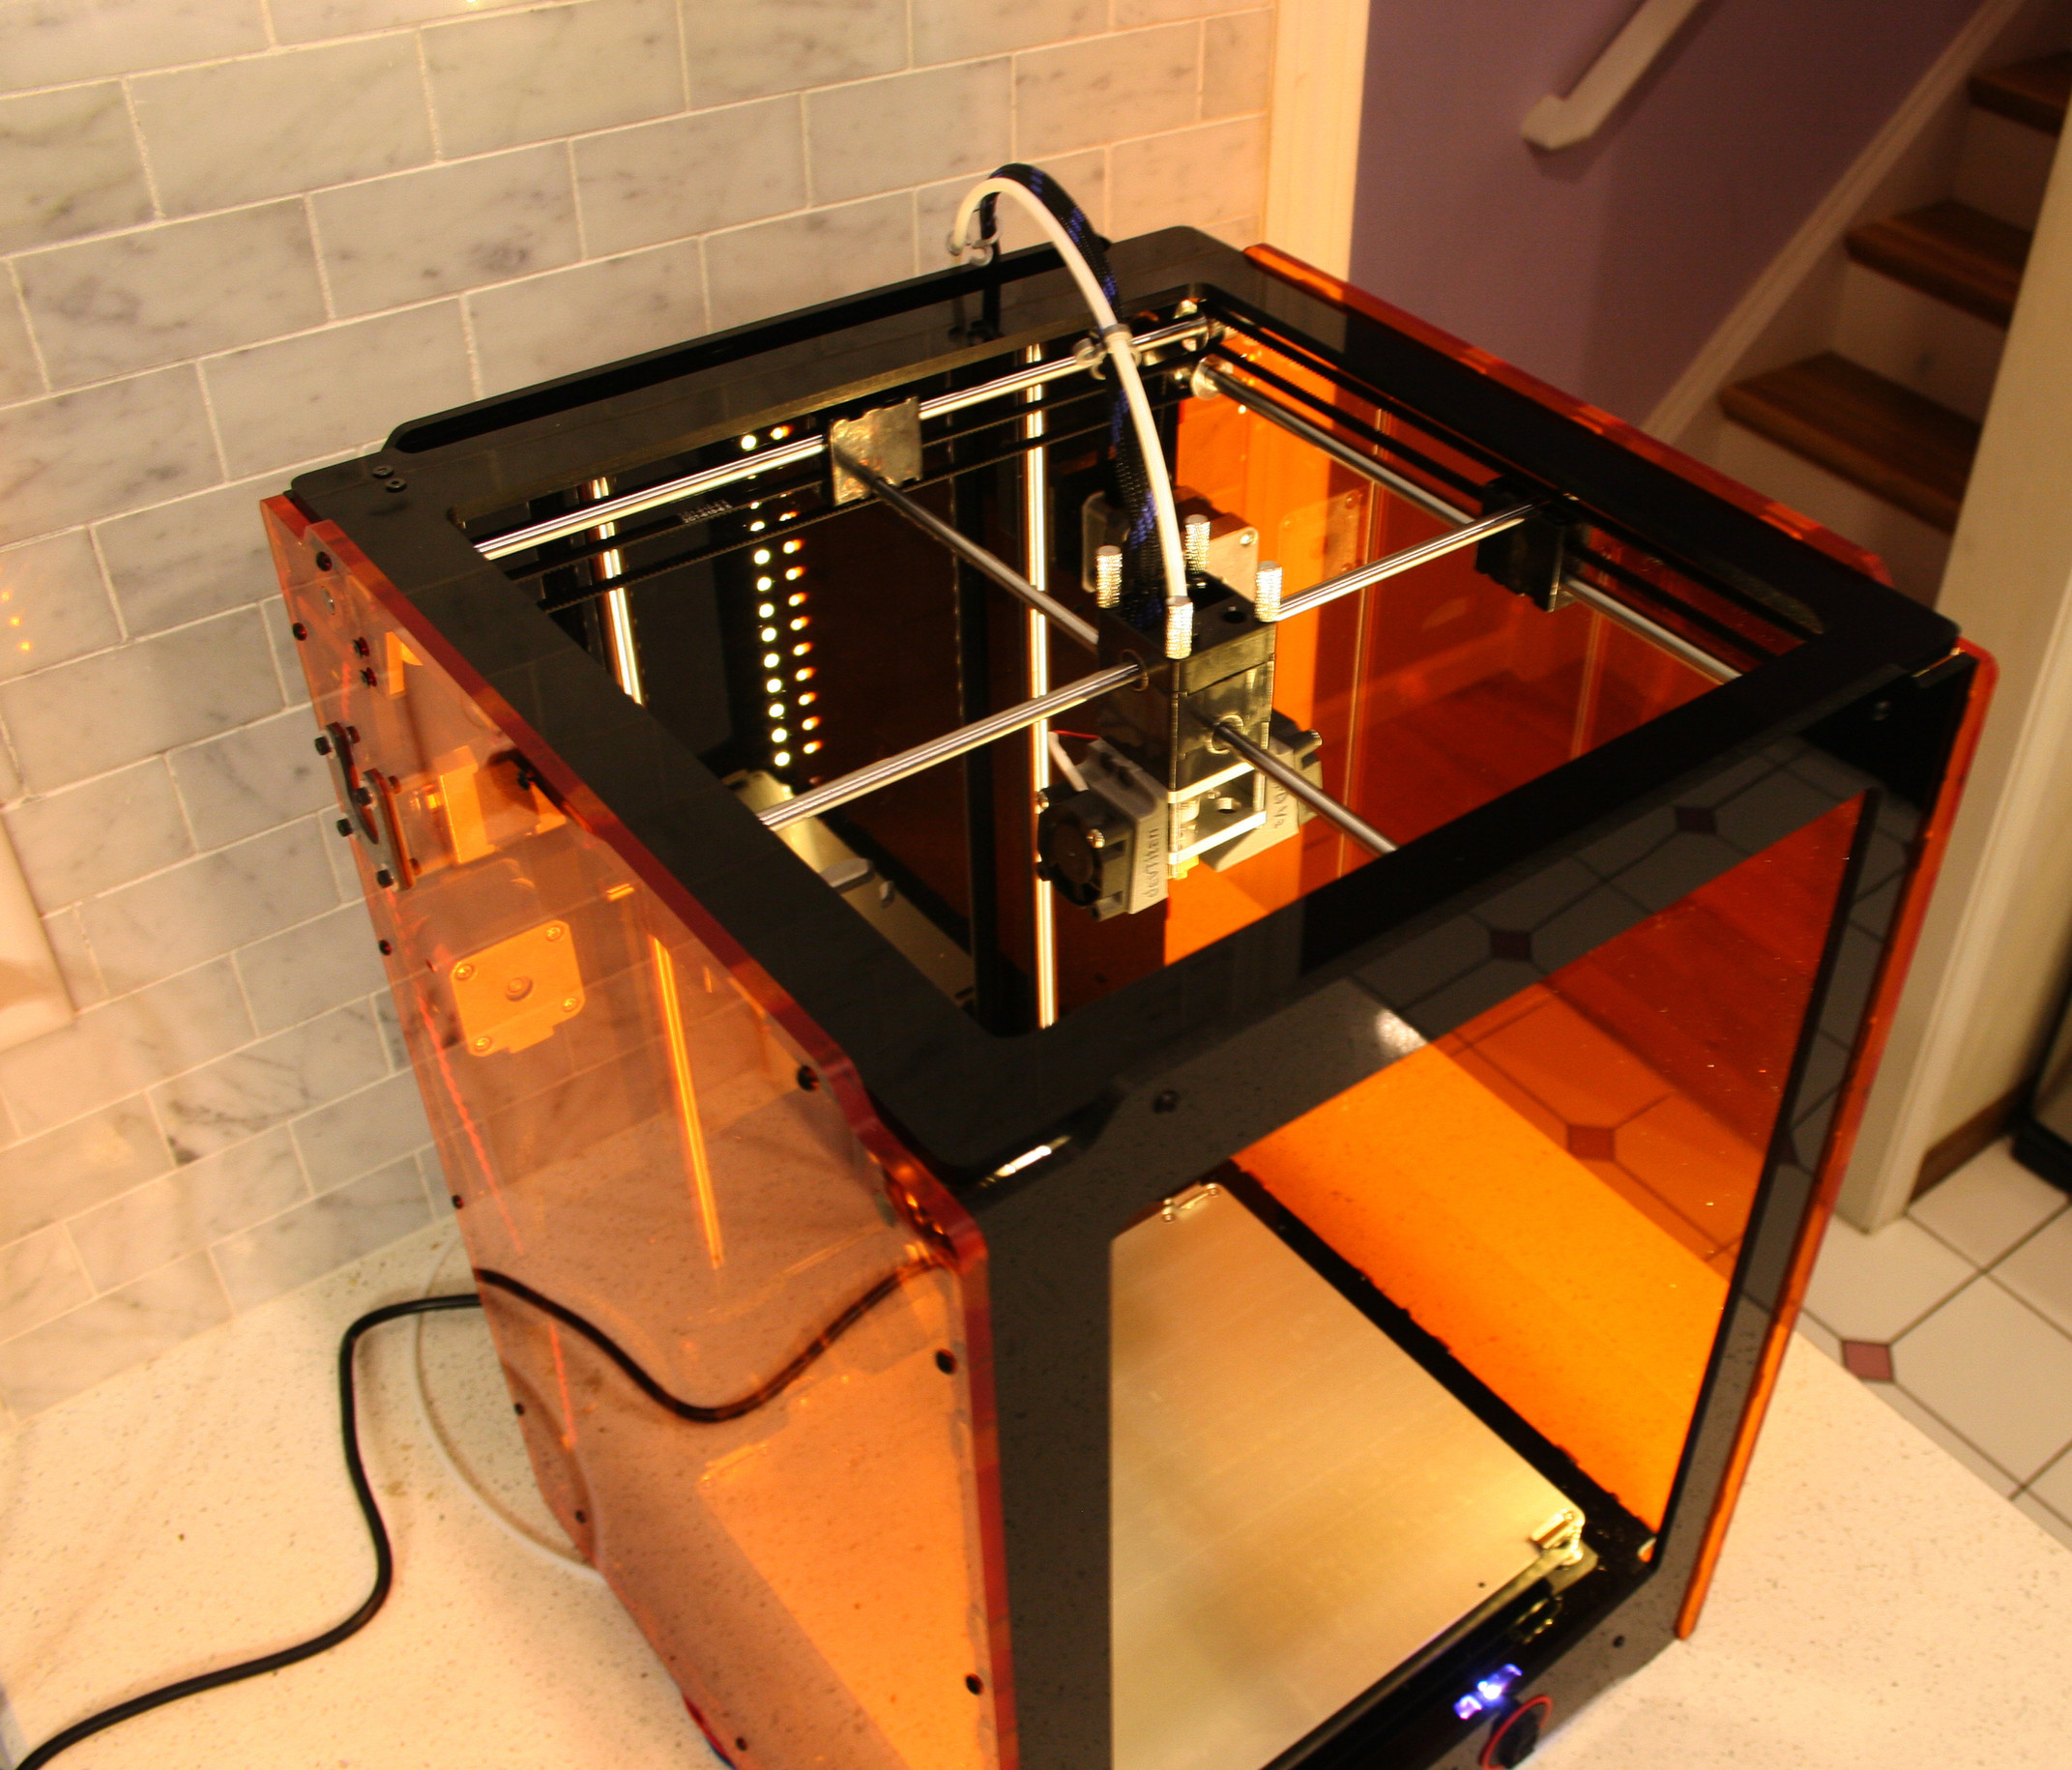 Best ideas about DIY 3D Printer Plans Pdf
. Save or Pin DIY 3D printers Ultimaker2 Open source Now.